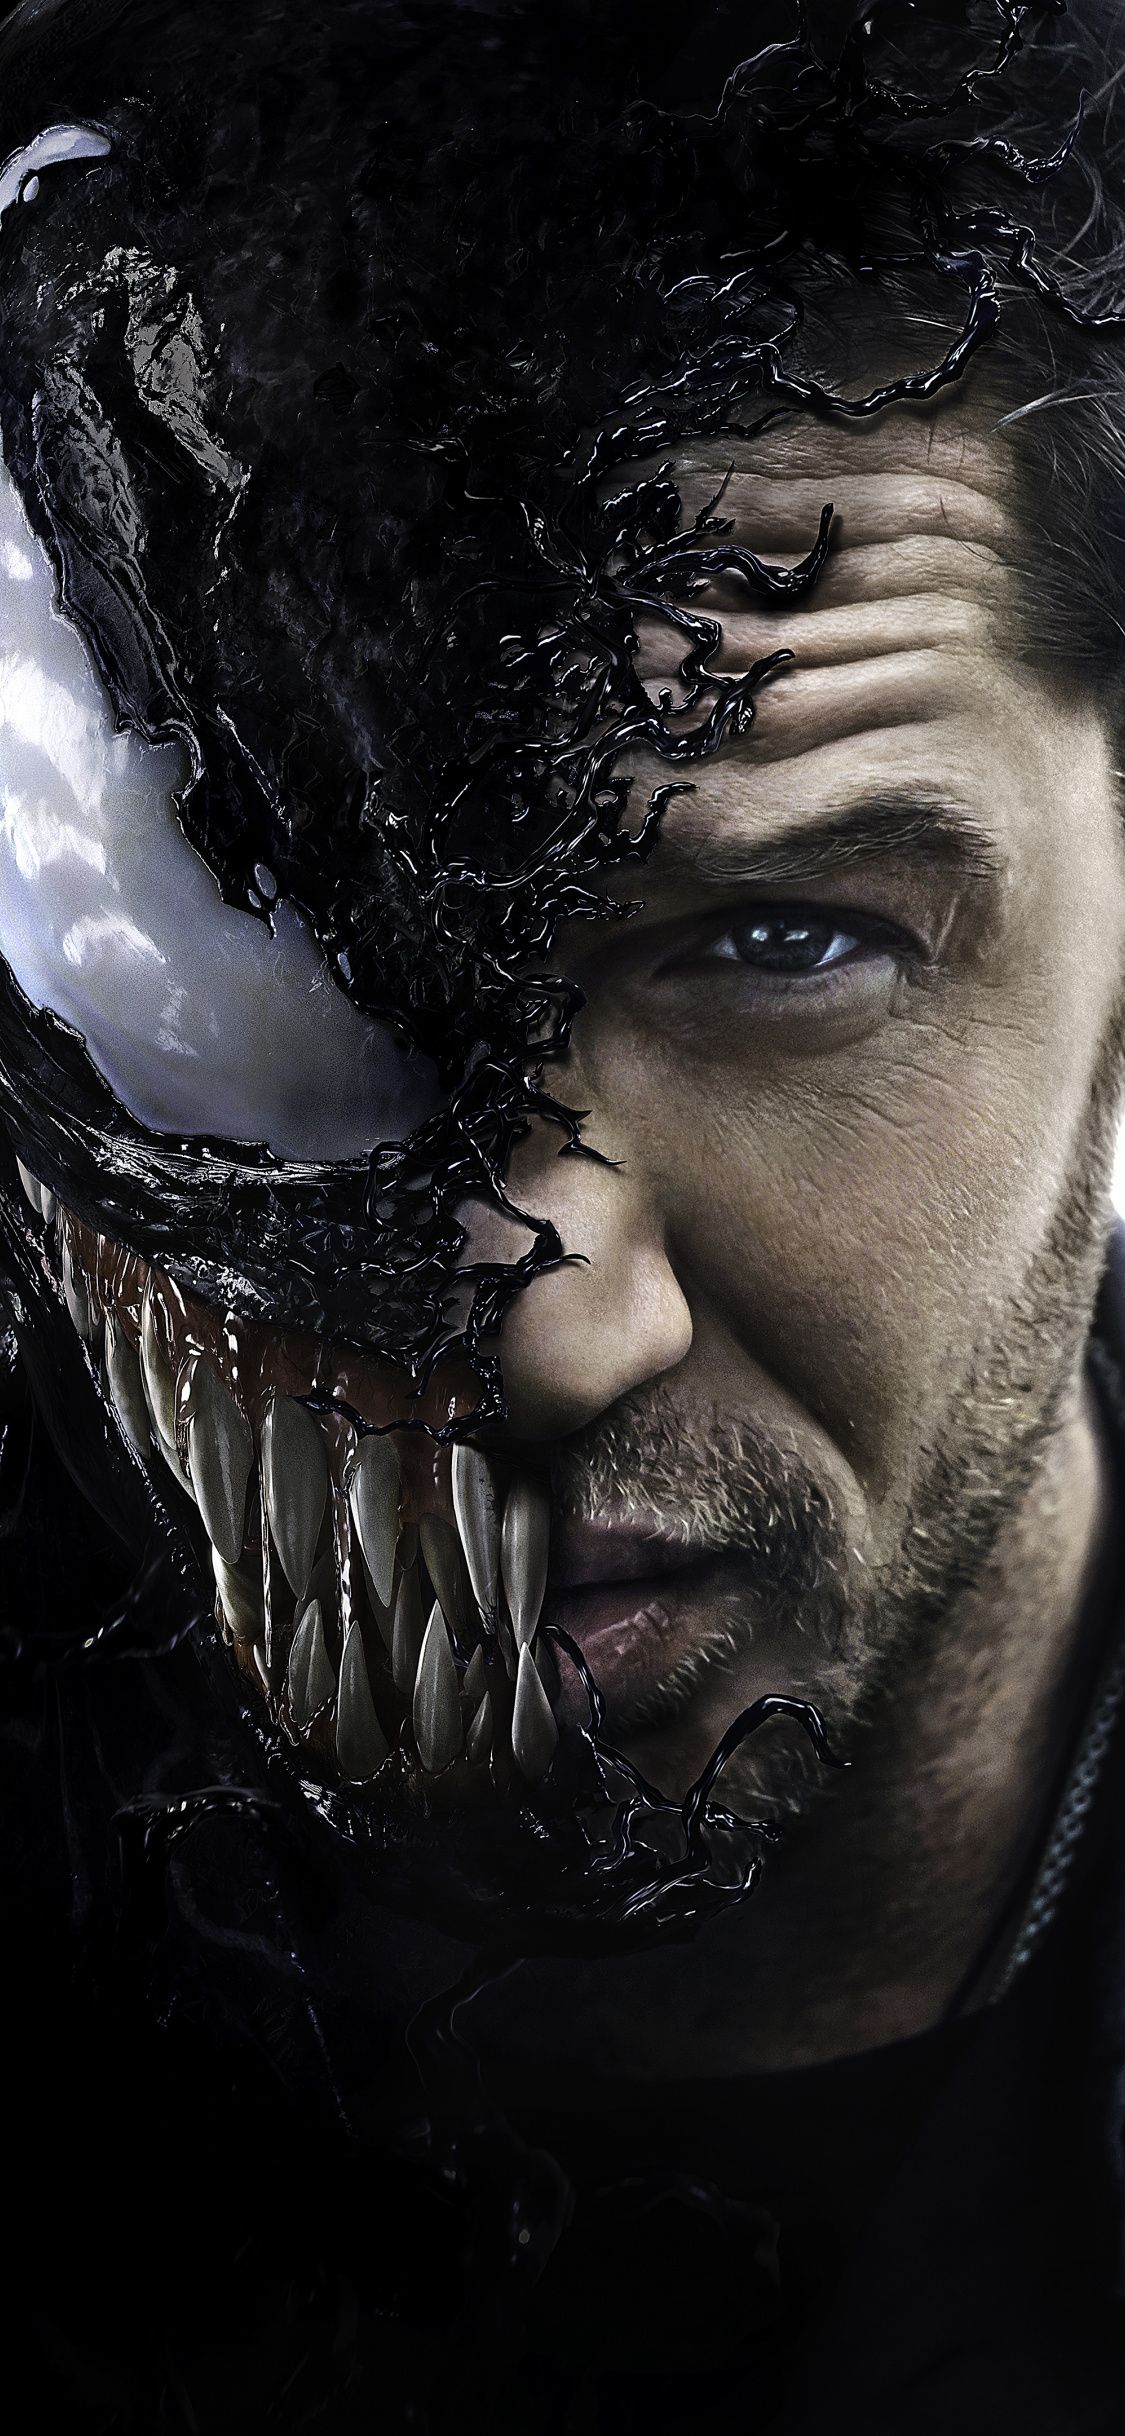 Tom hardy, 2018 movie, Venom, poster wallpaper, 8884x HD image, picture, e5d0342f